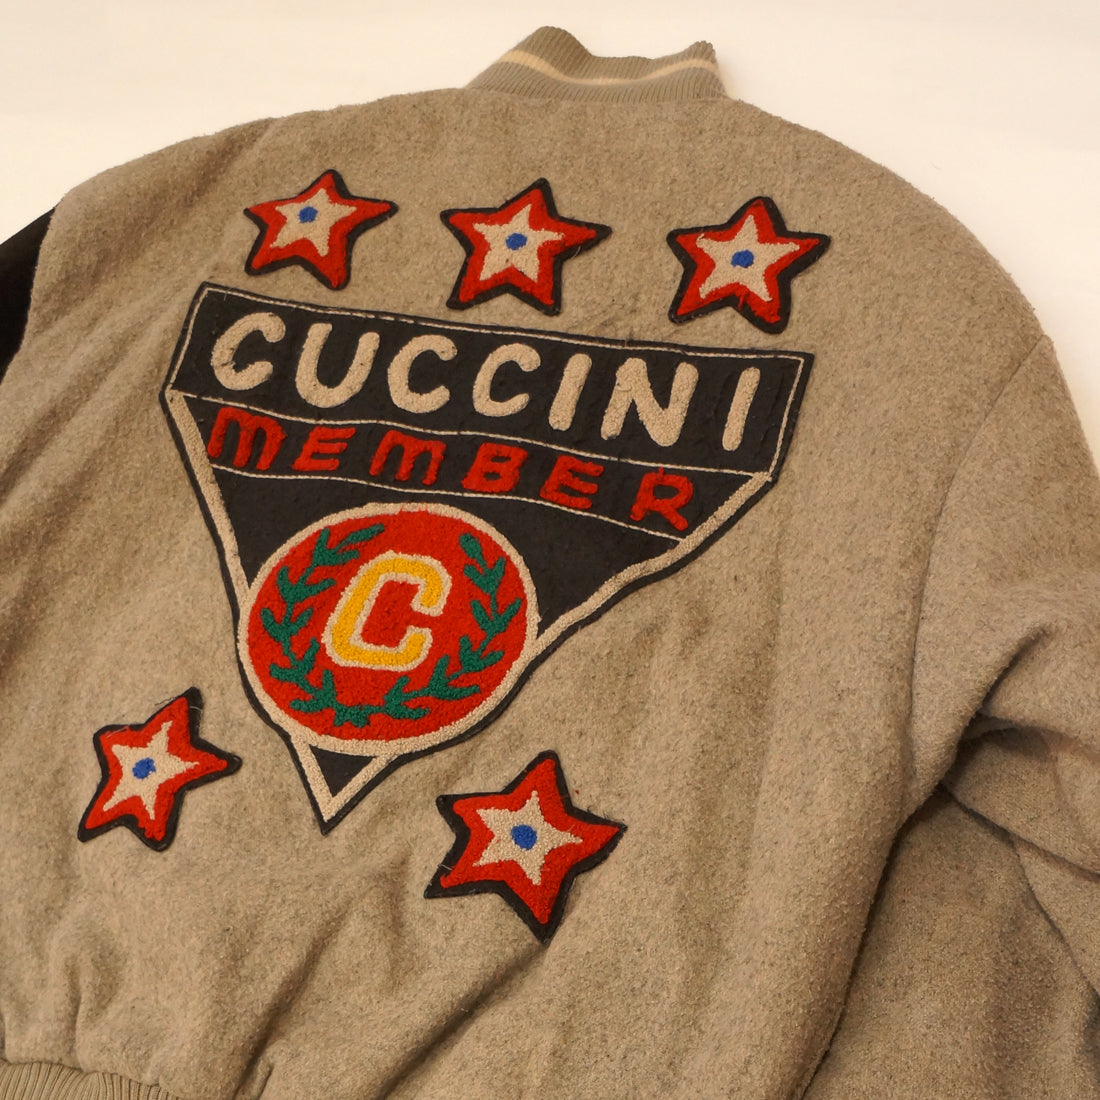 Vintage "Cuccini Member" Jacket